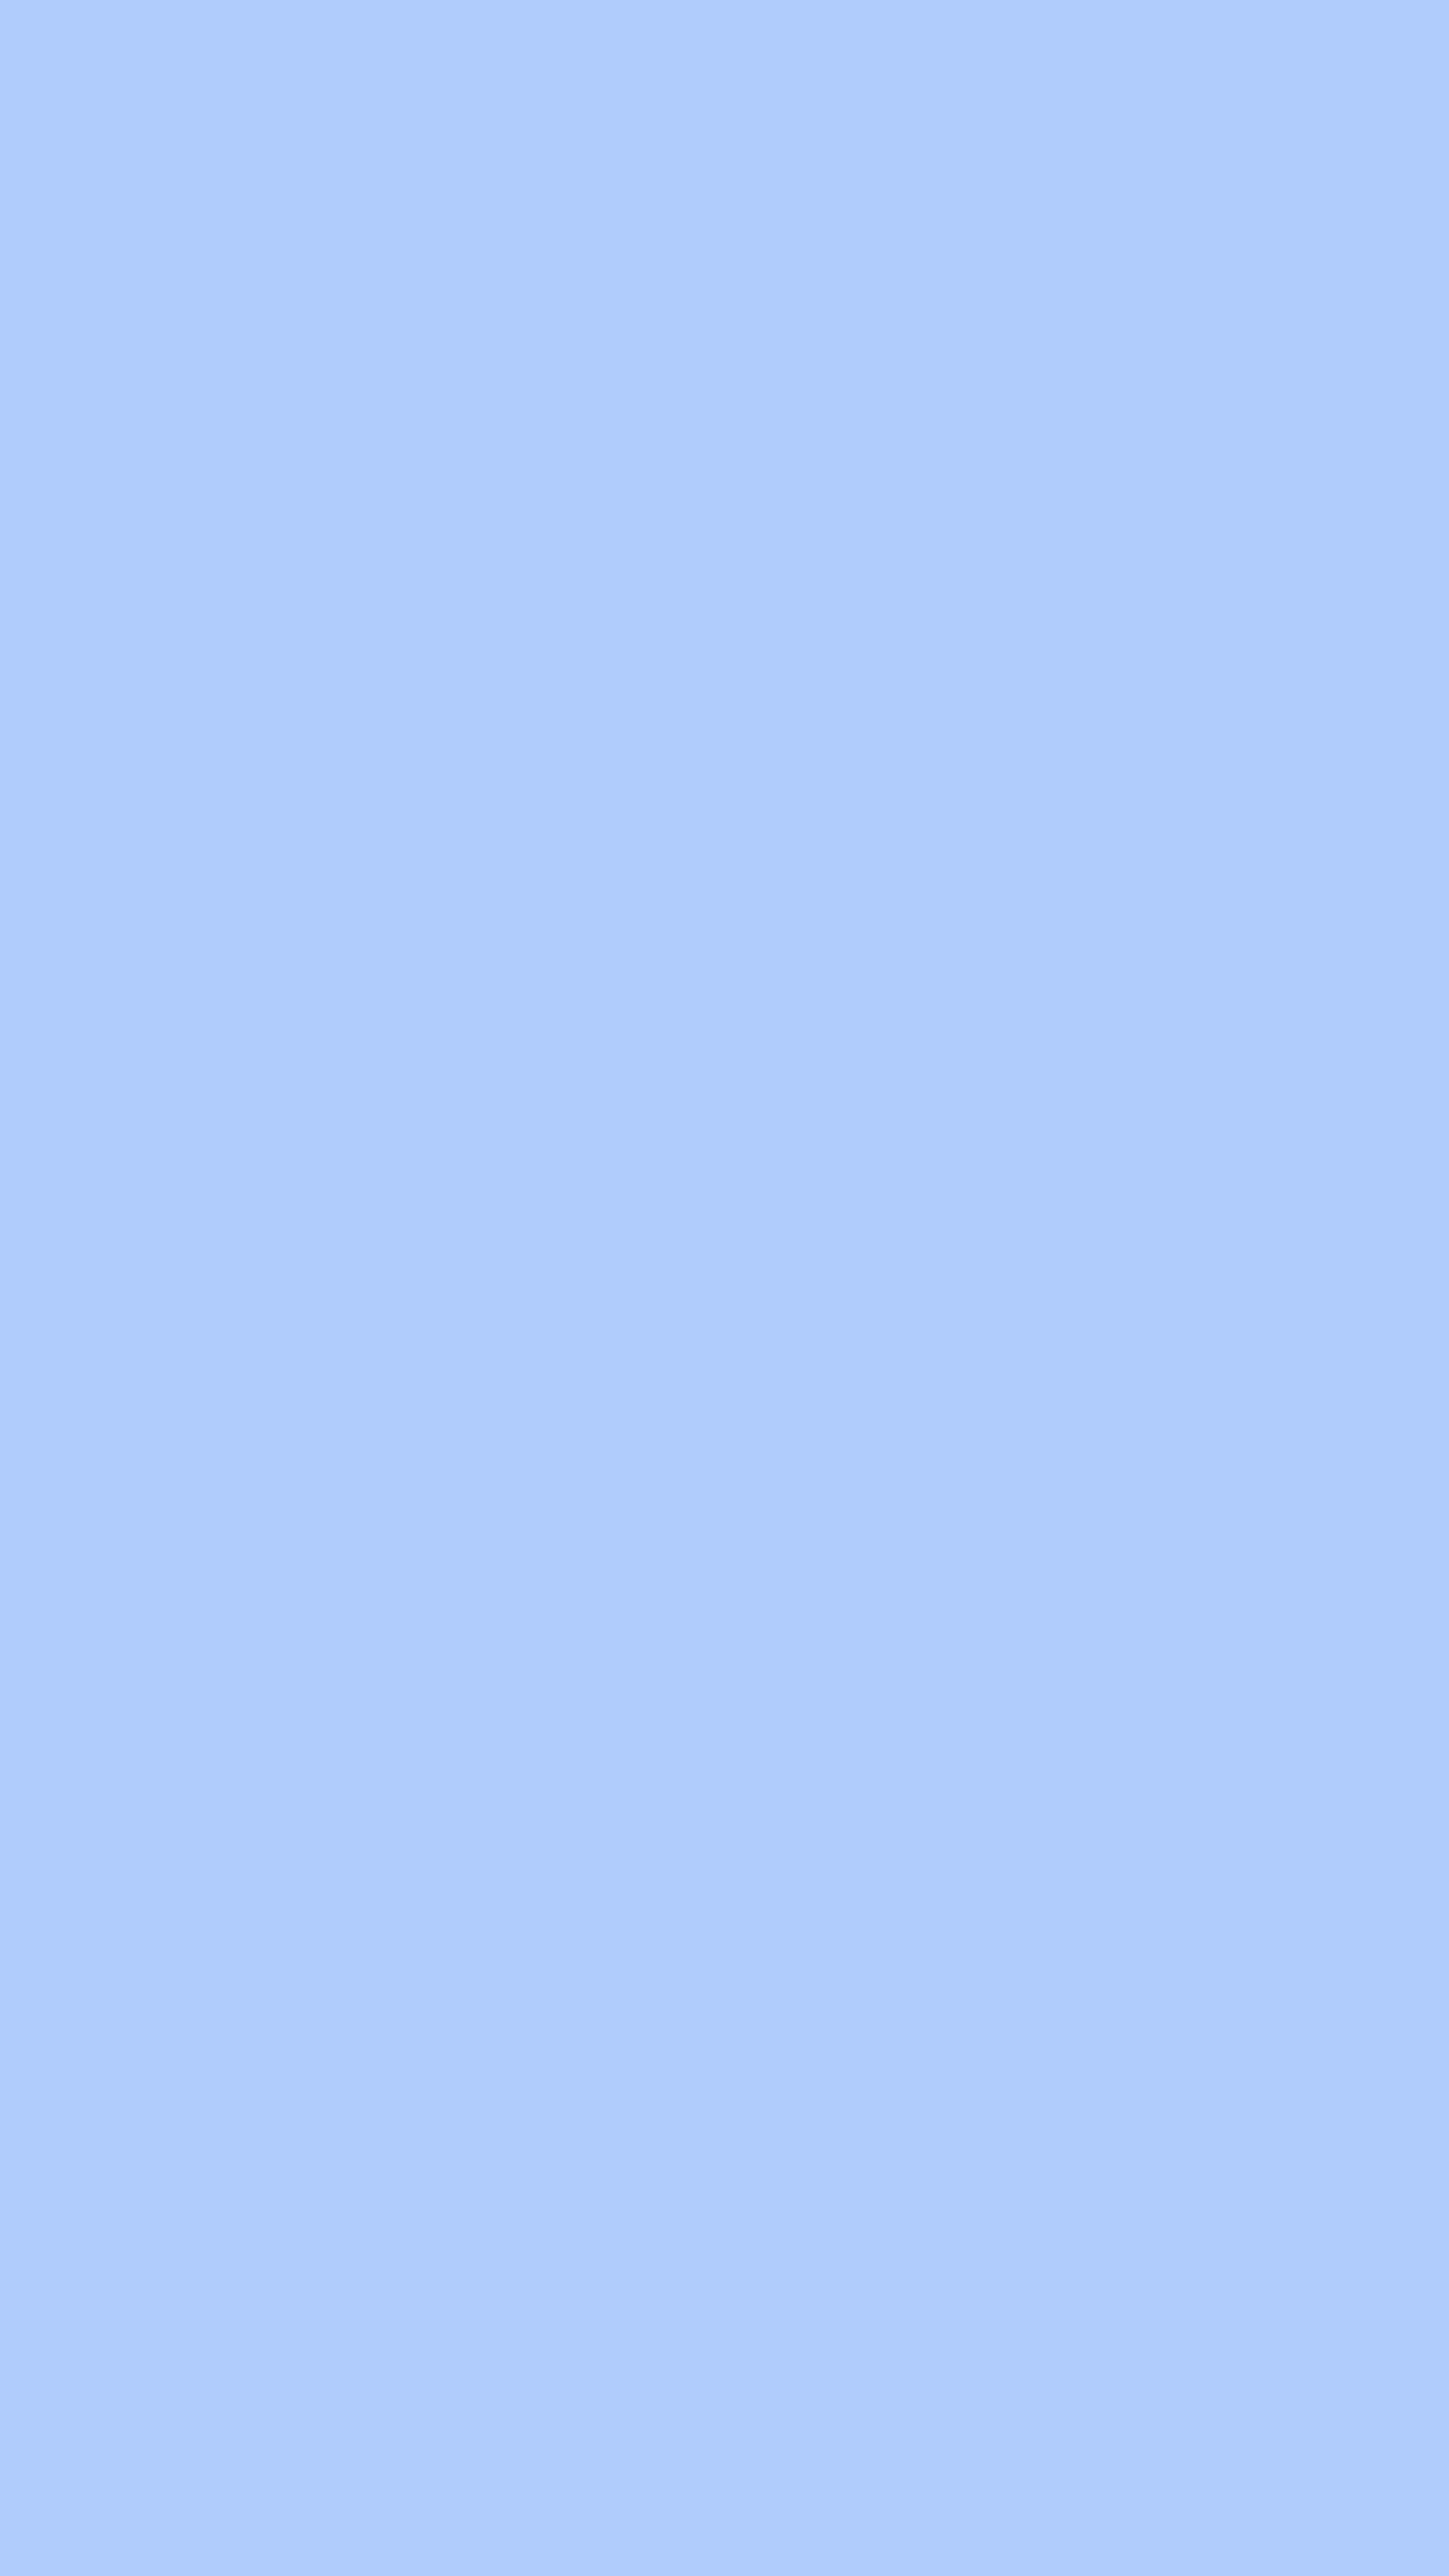 Blue Sky and Calm Ocean View Wallpaper[ac4ed42ee68f4276b2a9]